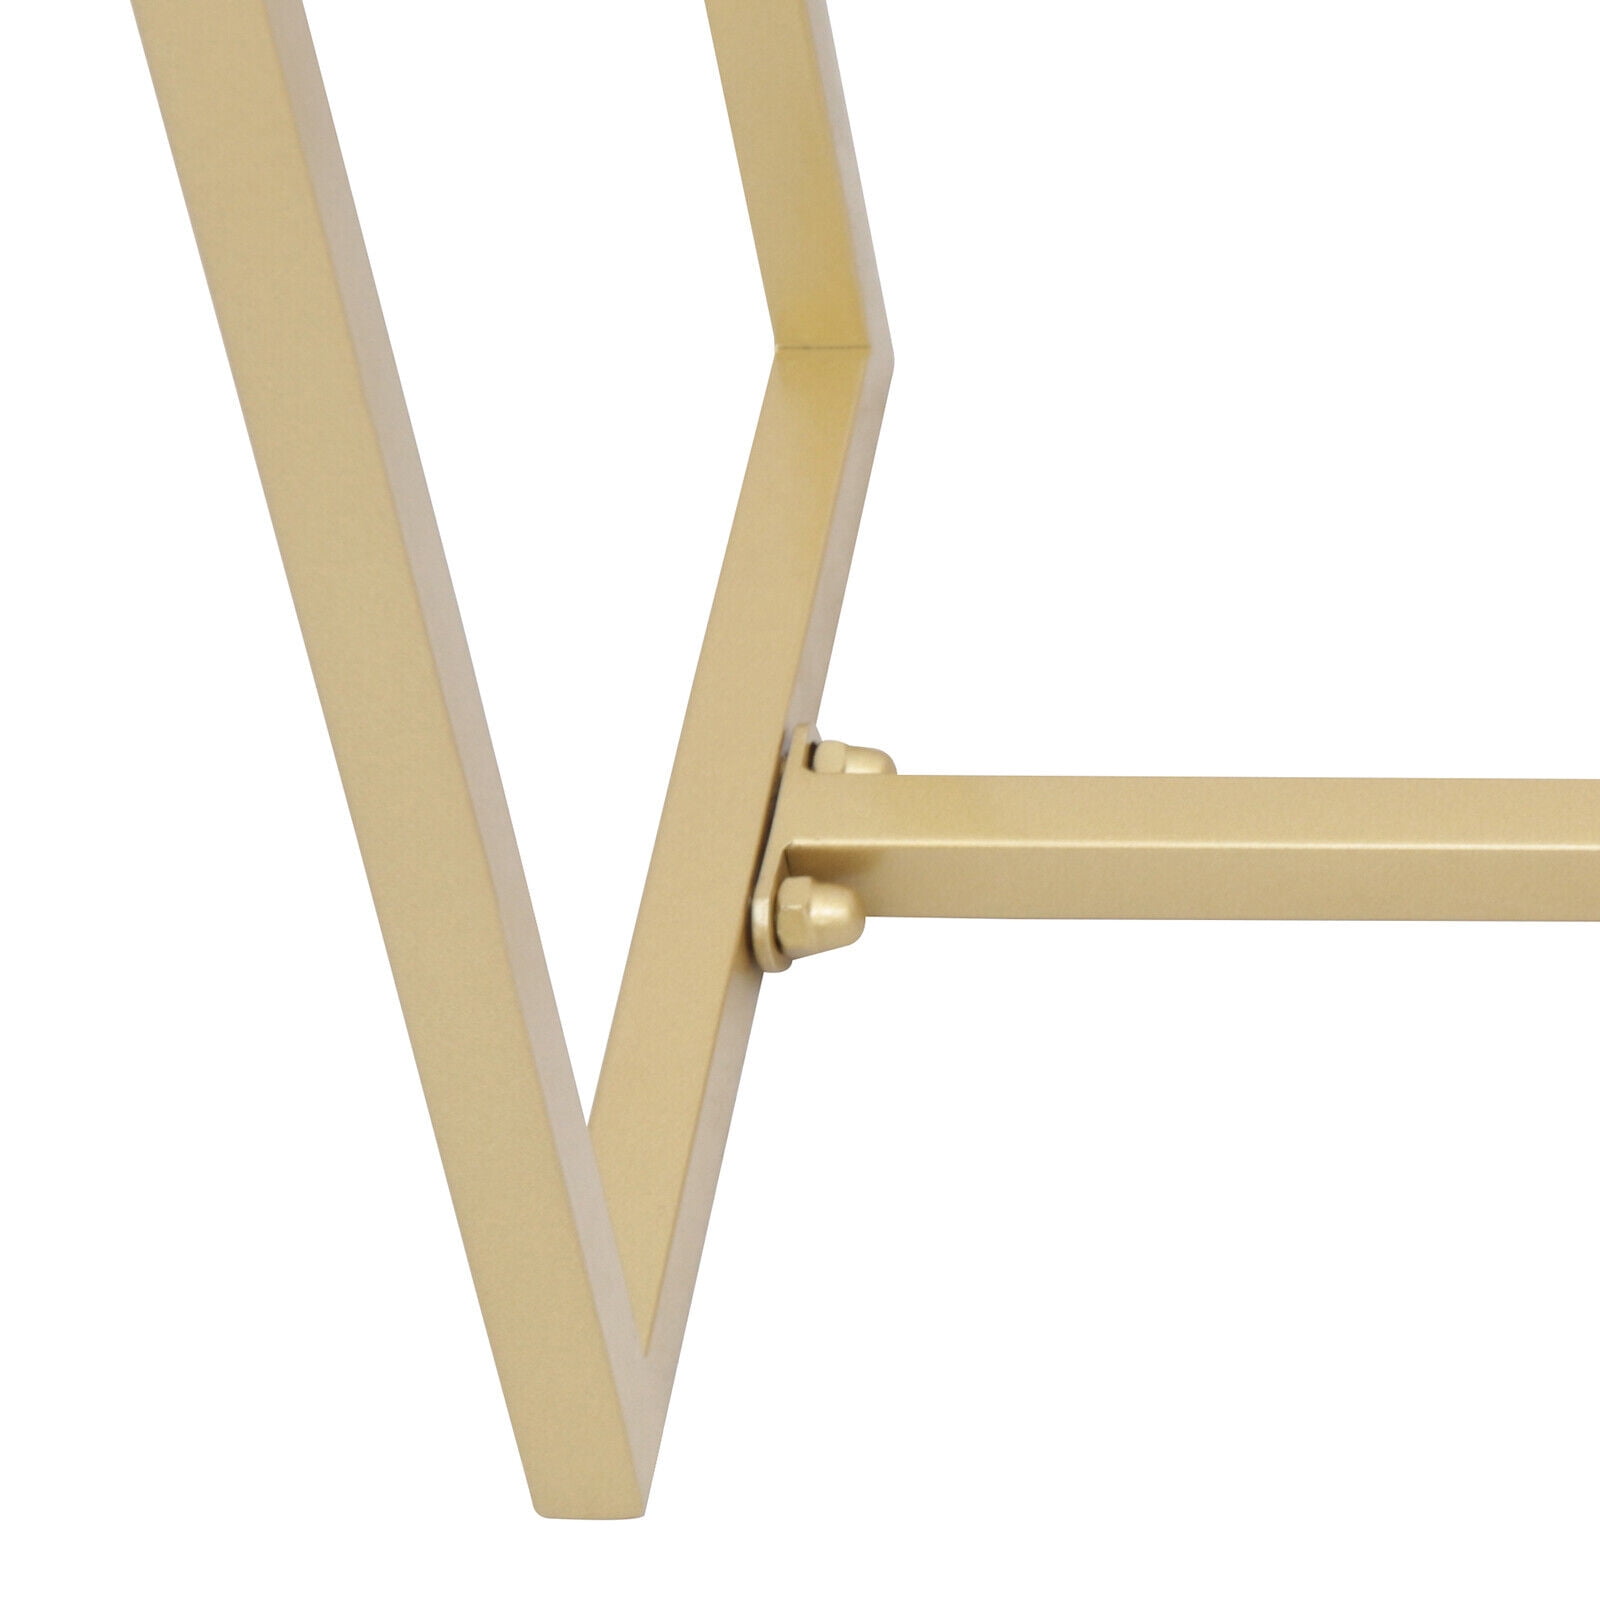 YIFU DISPLAY Purse Display Stand - 2 Pack Polished Gold Counter Adjustable  Height Handbag Display St…See more YIFU DISPLAY Purse Display Stand - 2